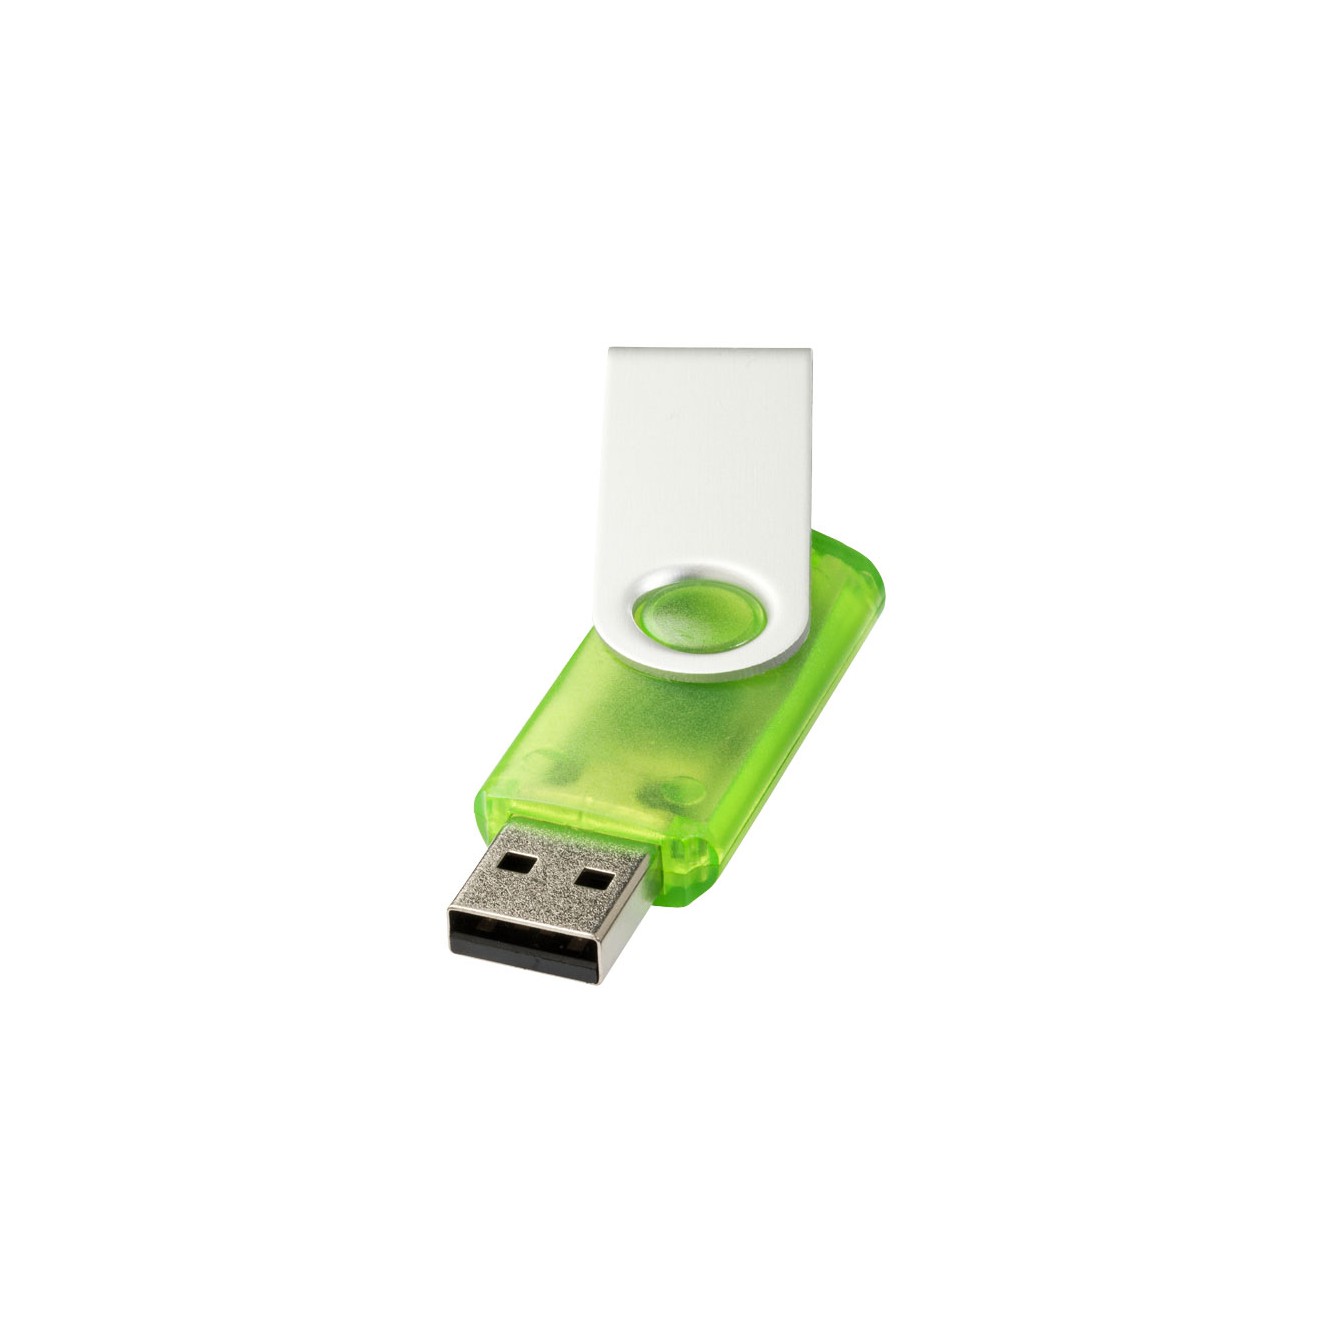 Rotate transculent USB stick